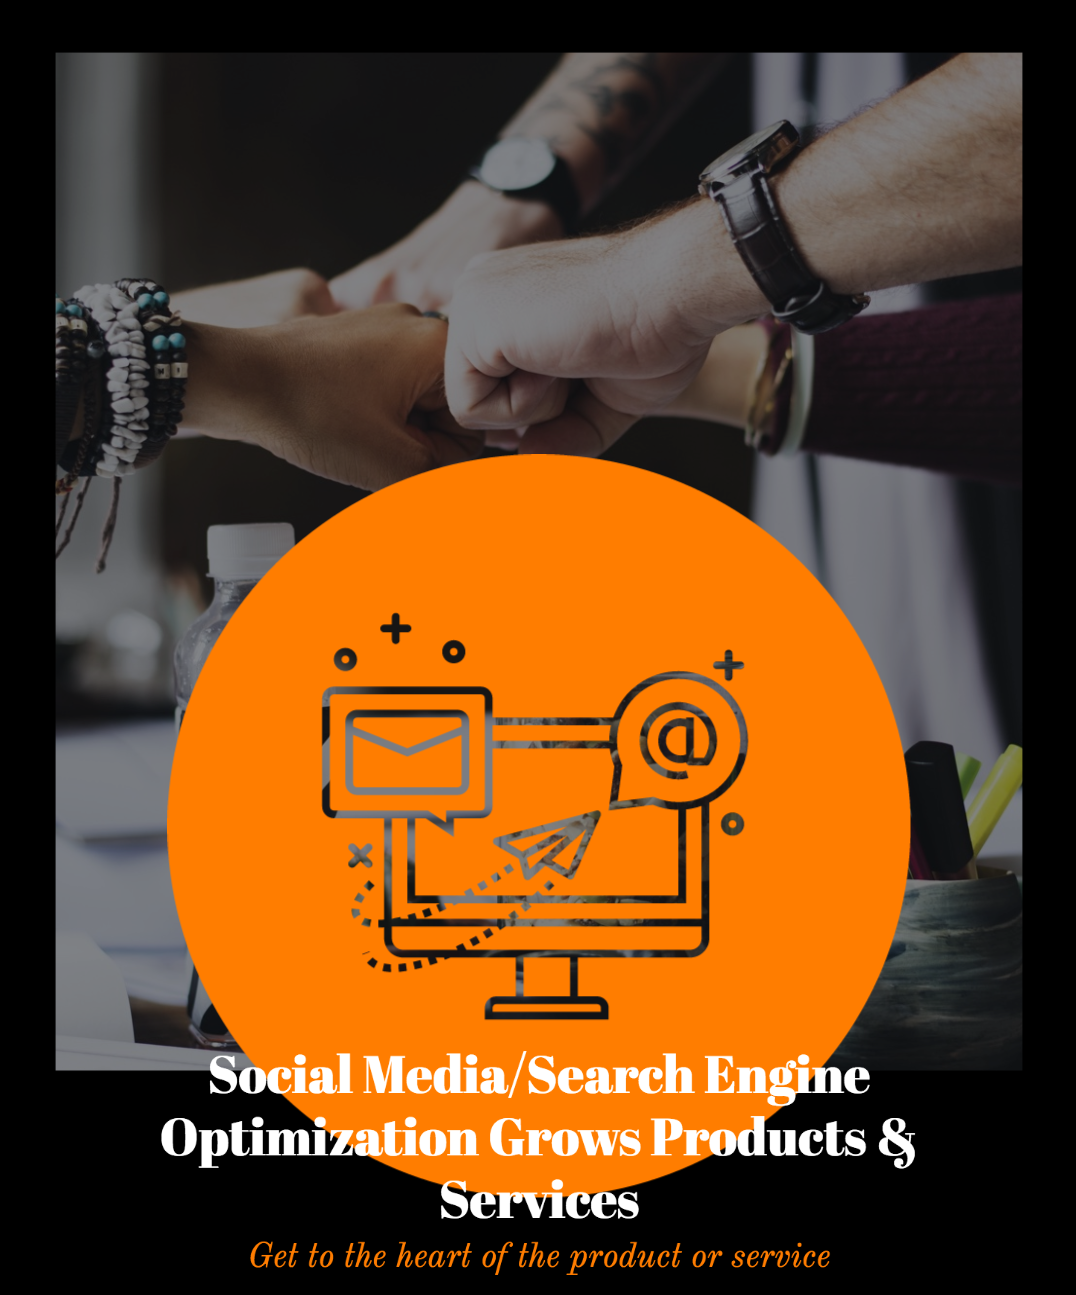 Social Media/Search Engine Marketing & Optimization Worldwide